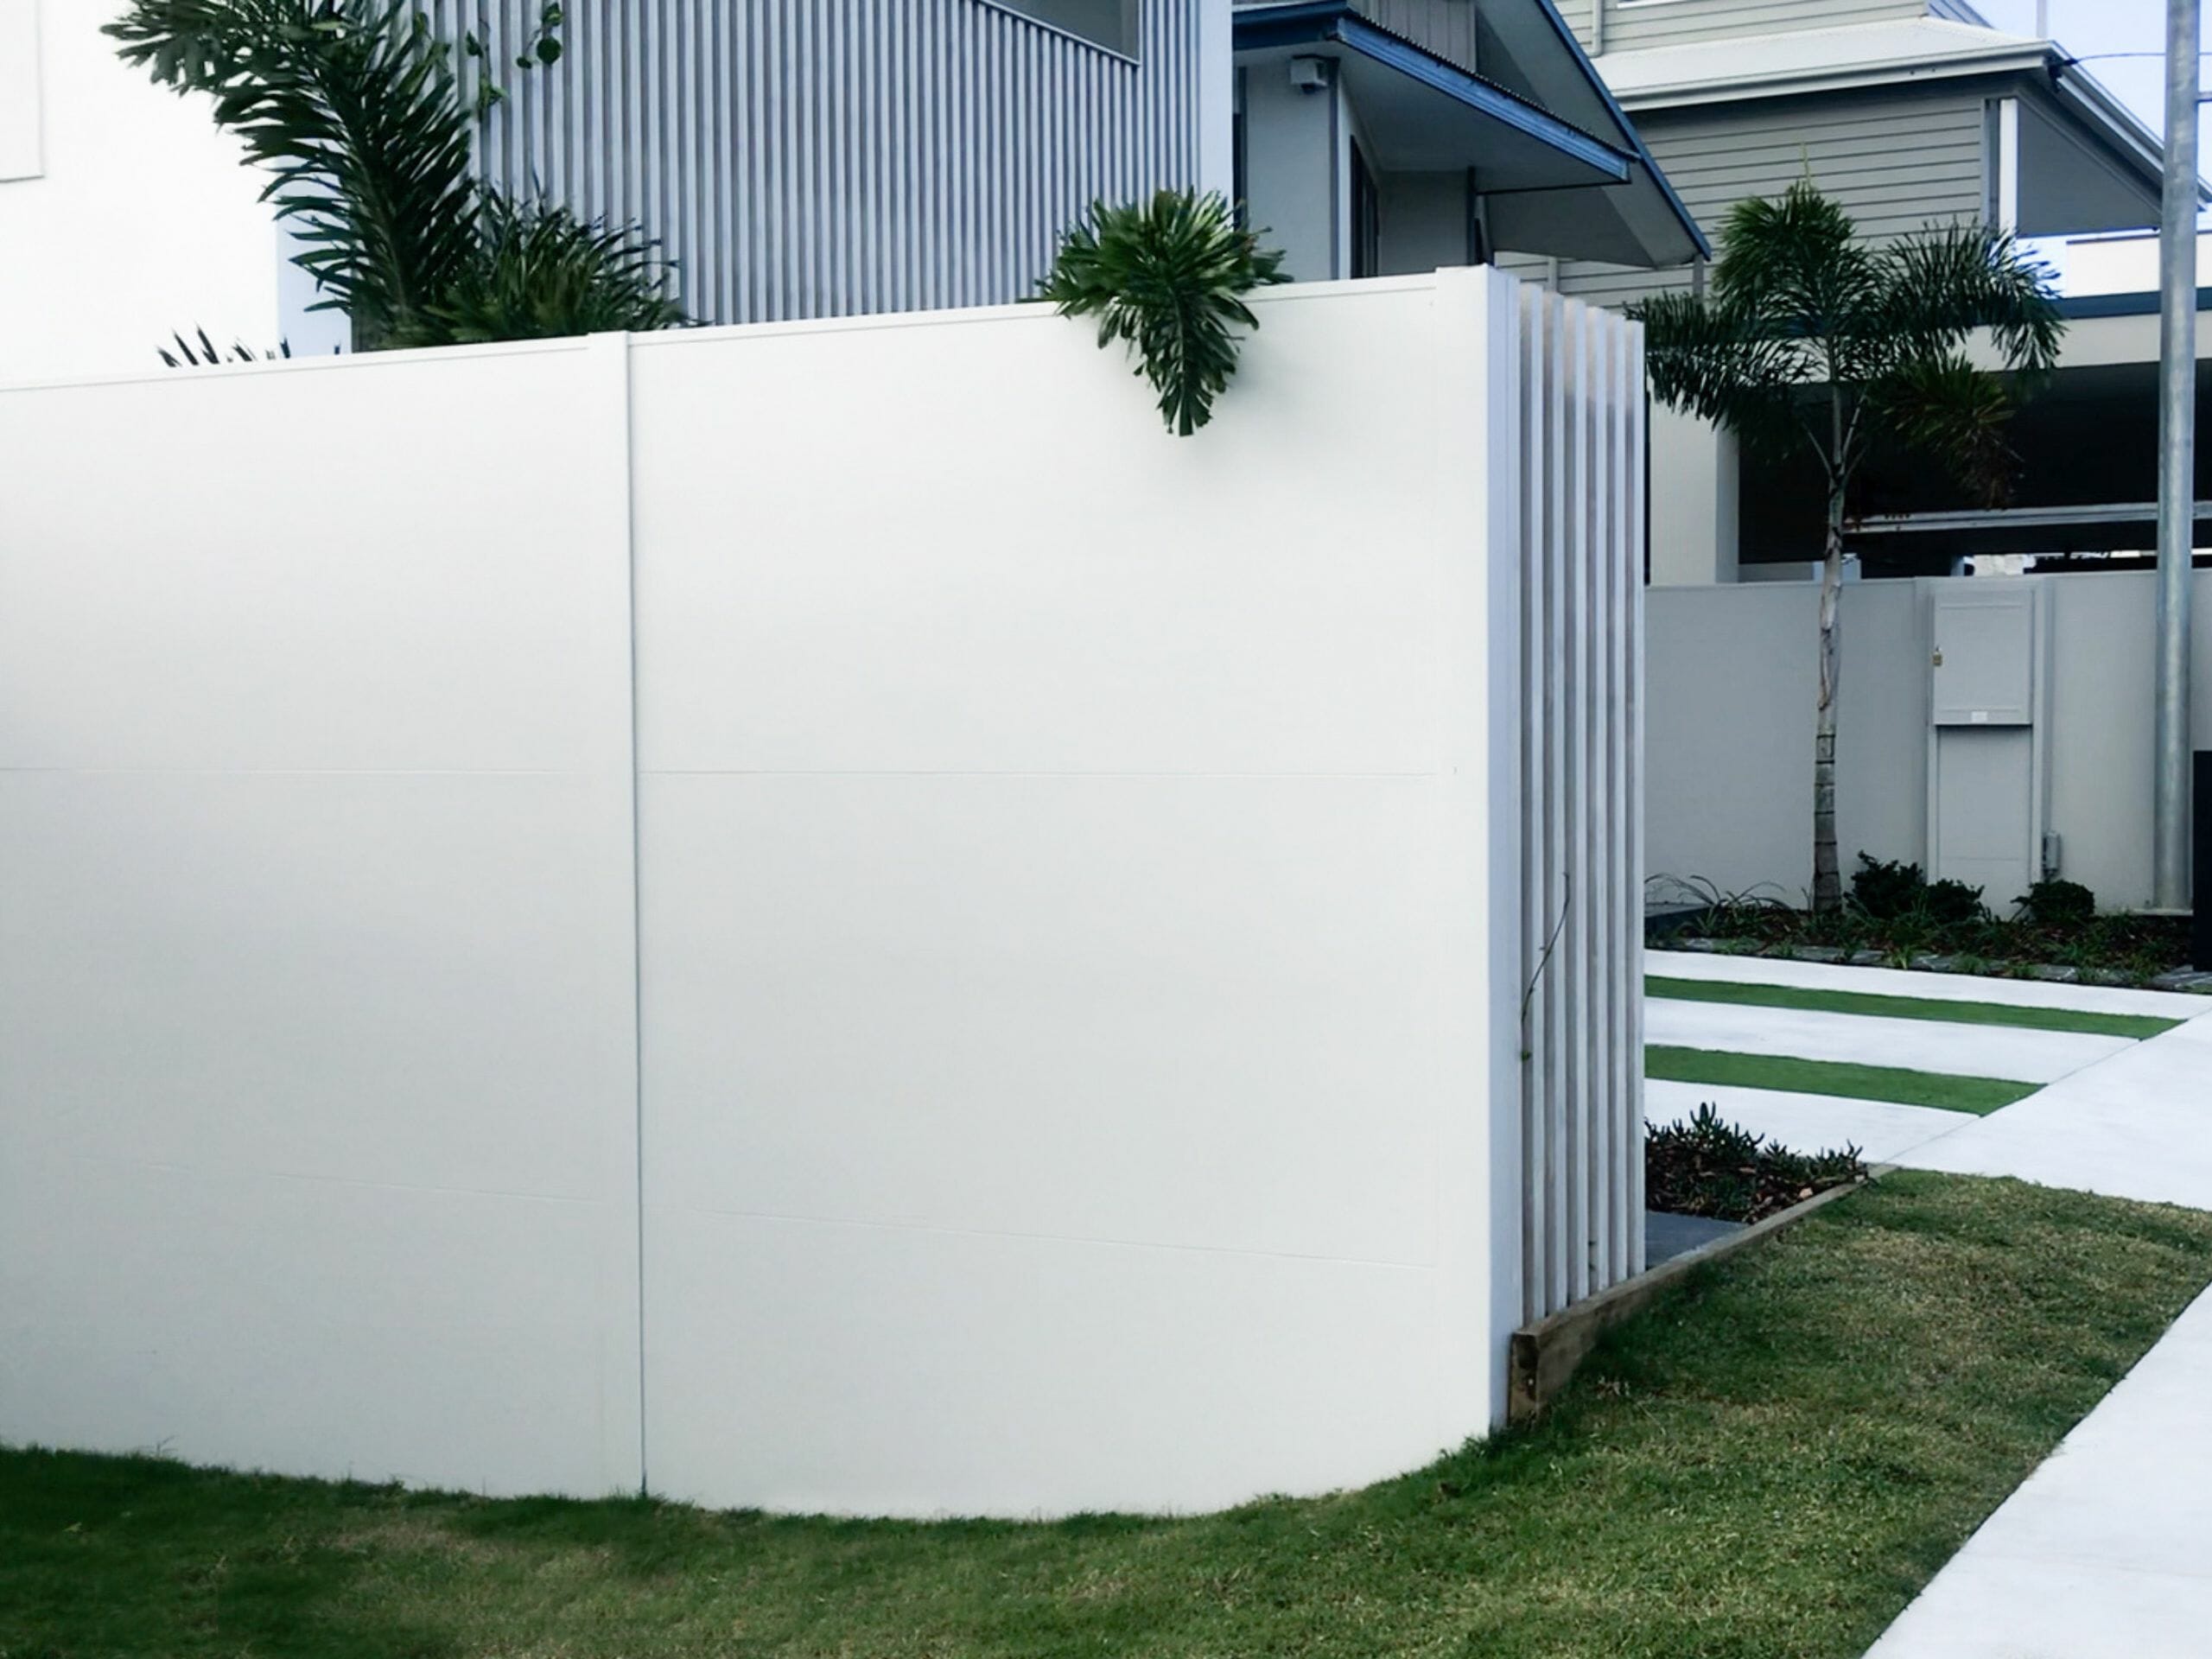 Achieve a premium retaining wall fence with ModularWalls' TerraFirm